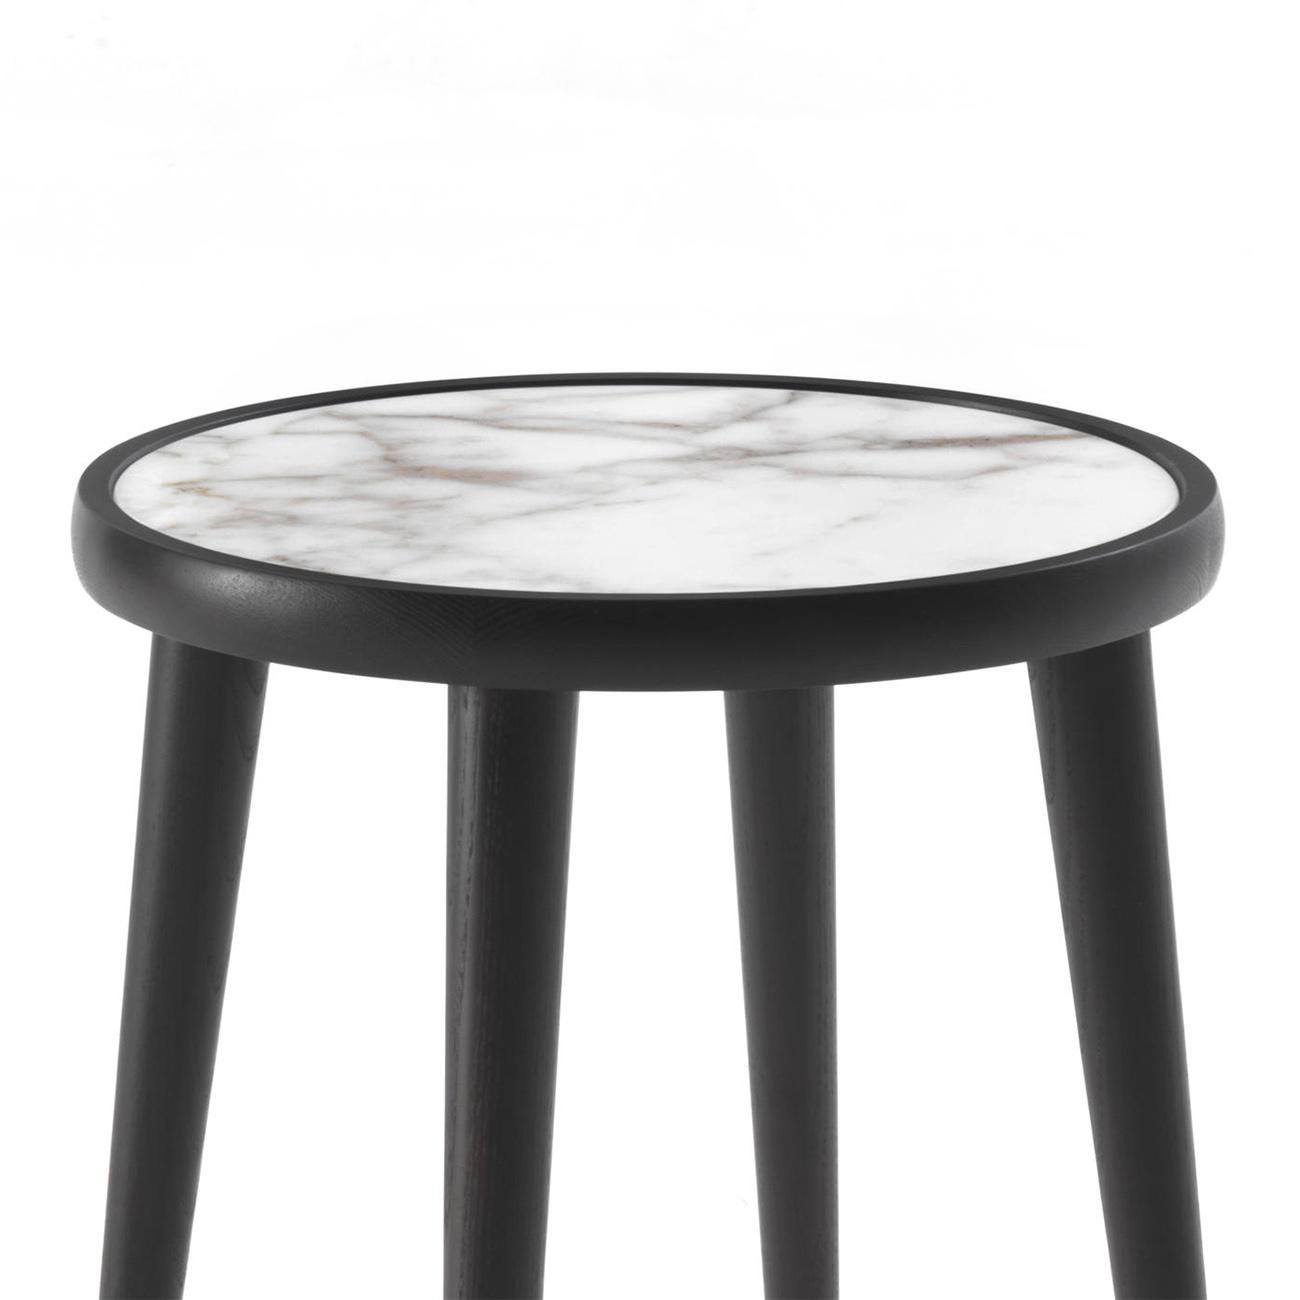 Table d'appoint Domio Marbre avec base en frêne massif en
finition teintée noircie. Avec calacatta blanc massif
plateau en marbre poli.